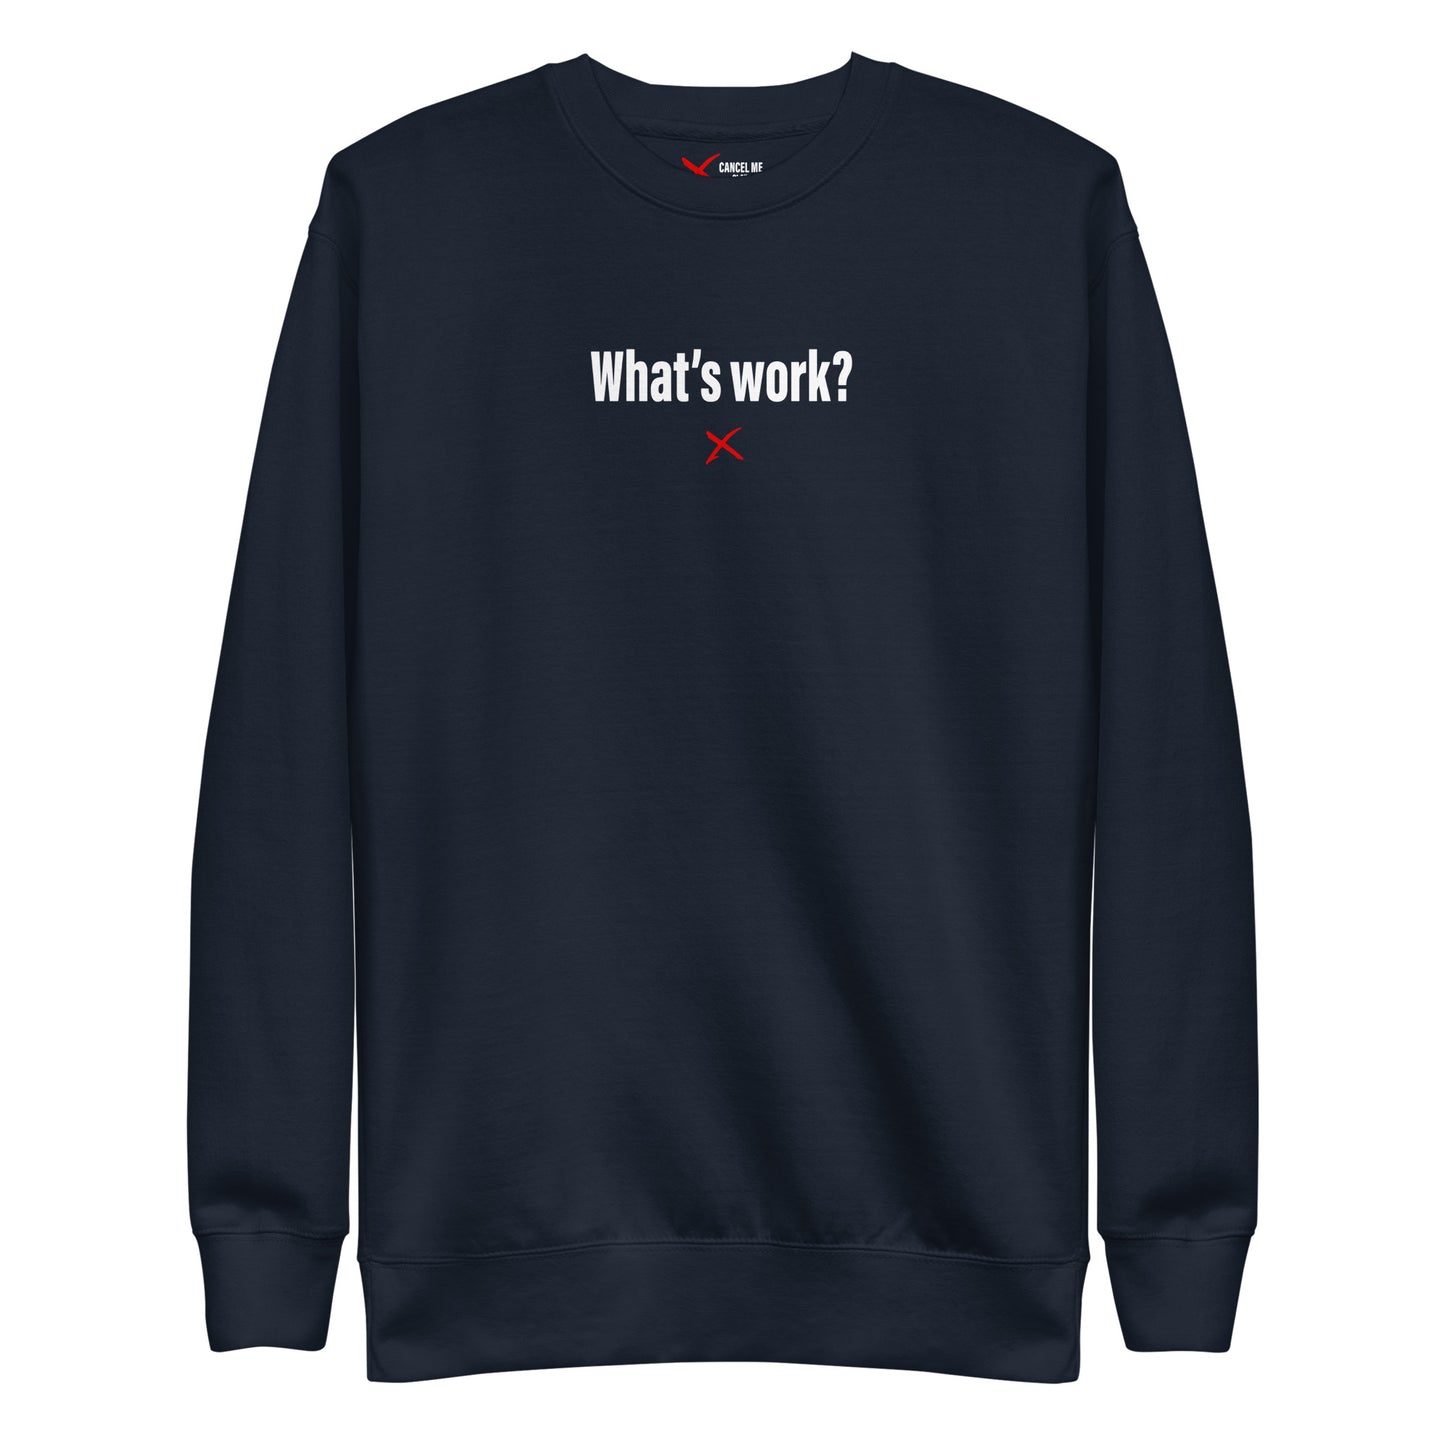 What's work? - Sweatshirt